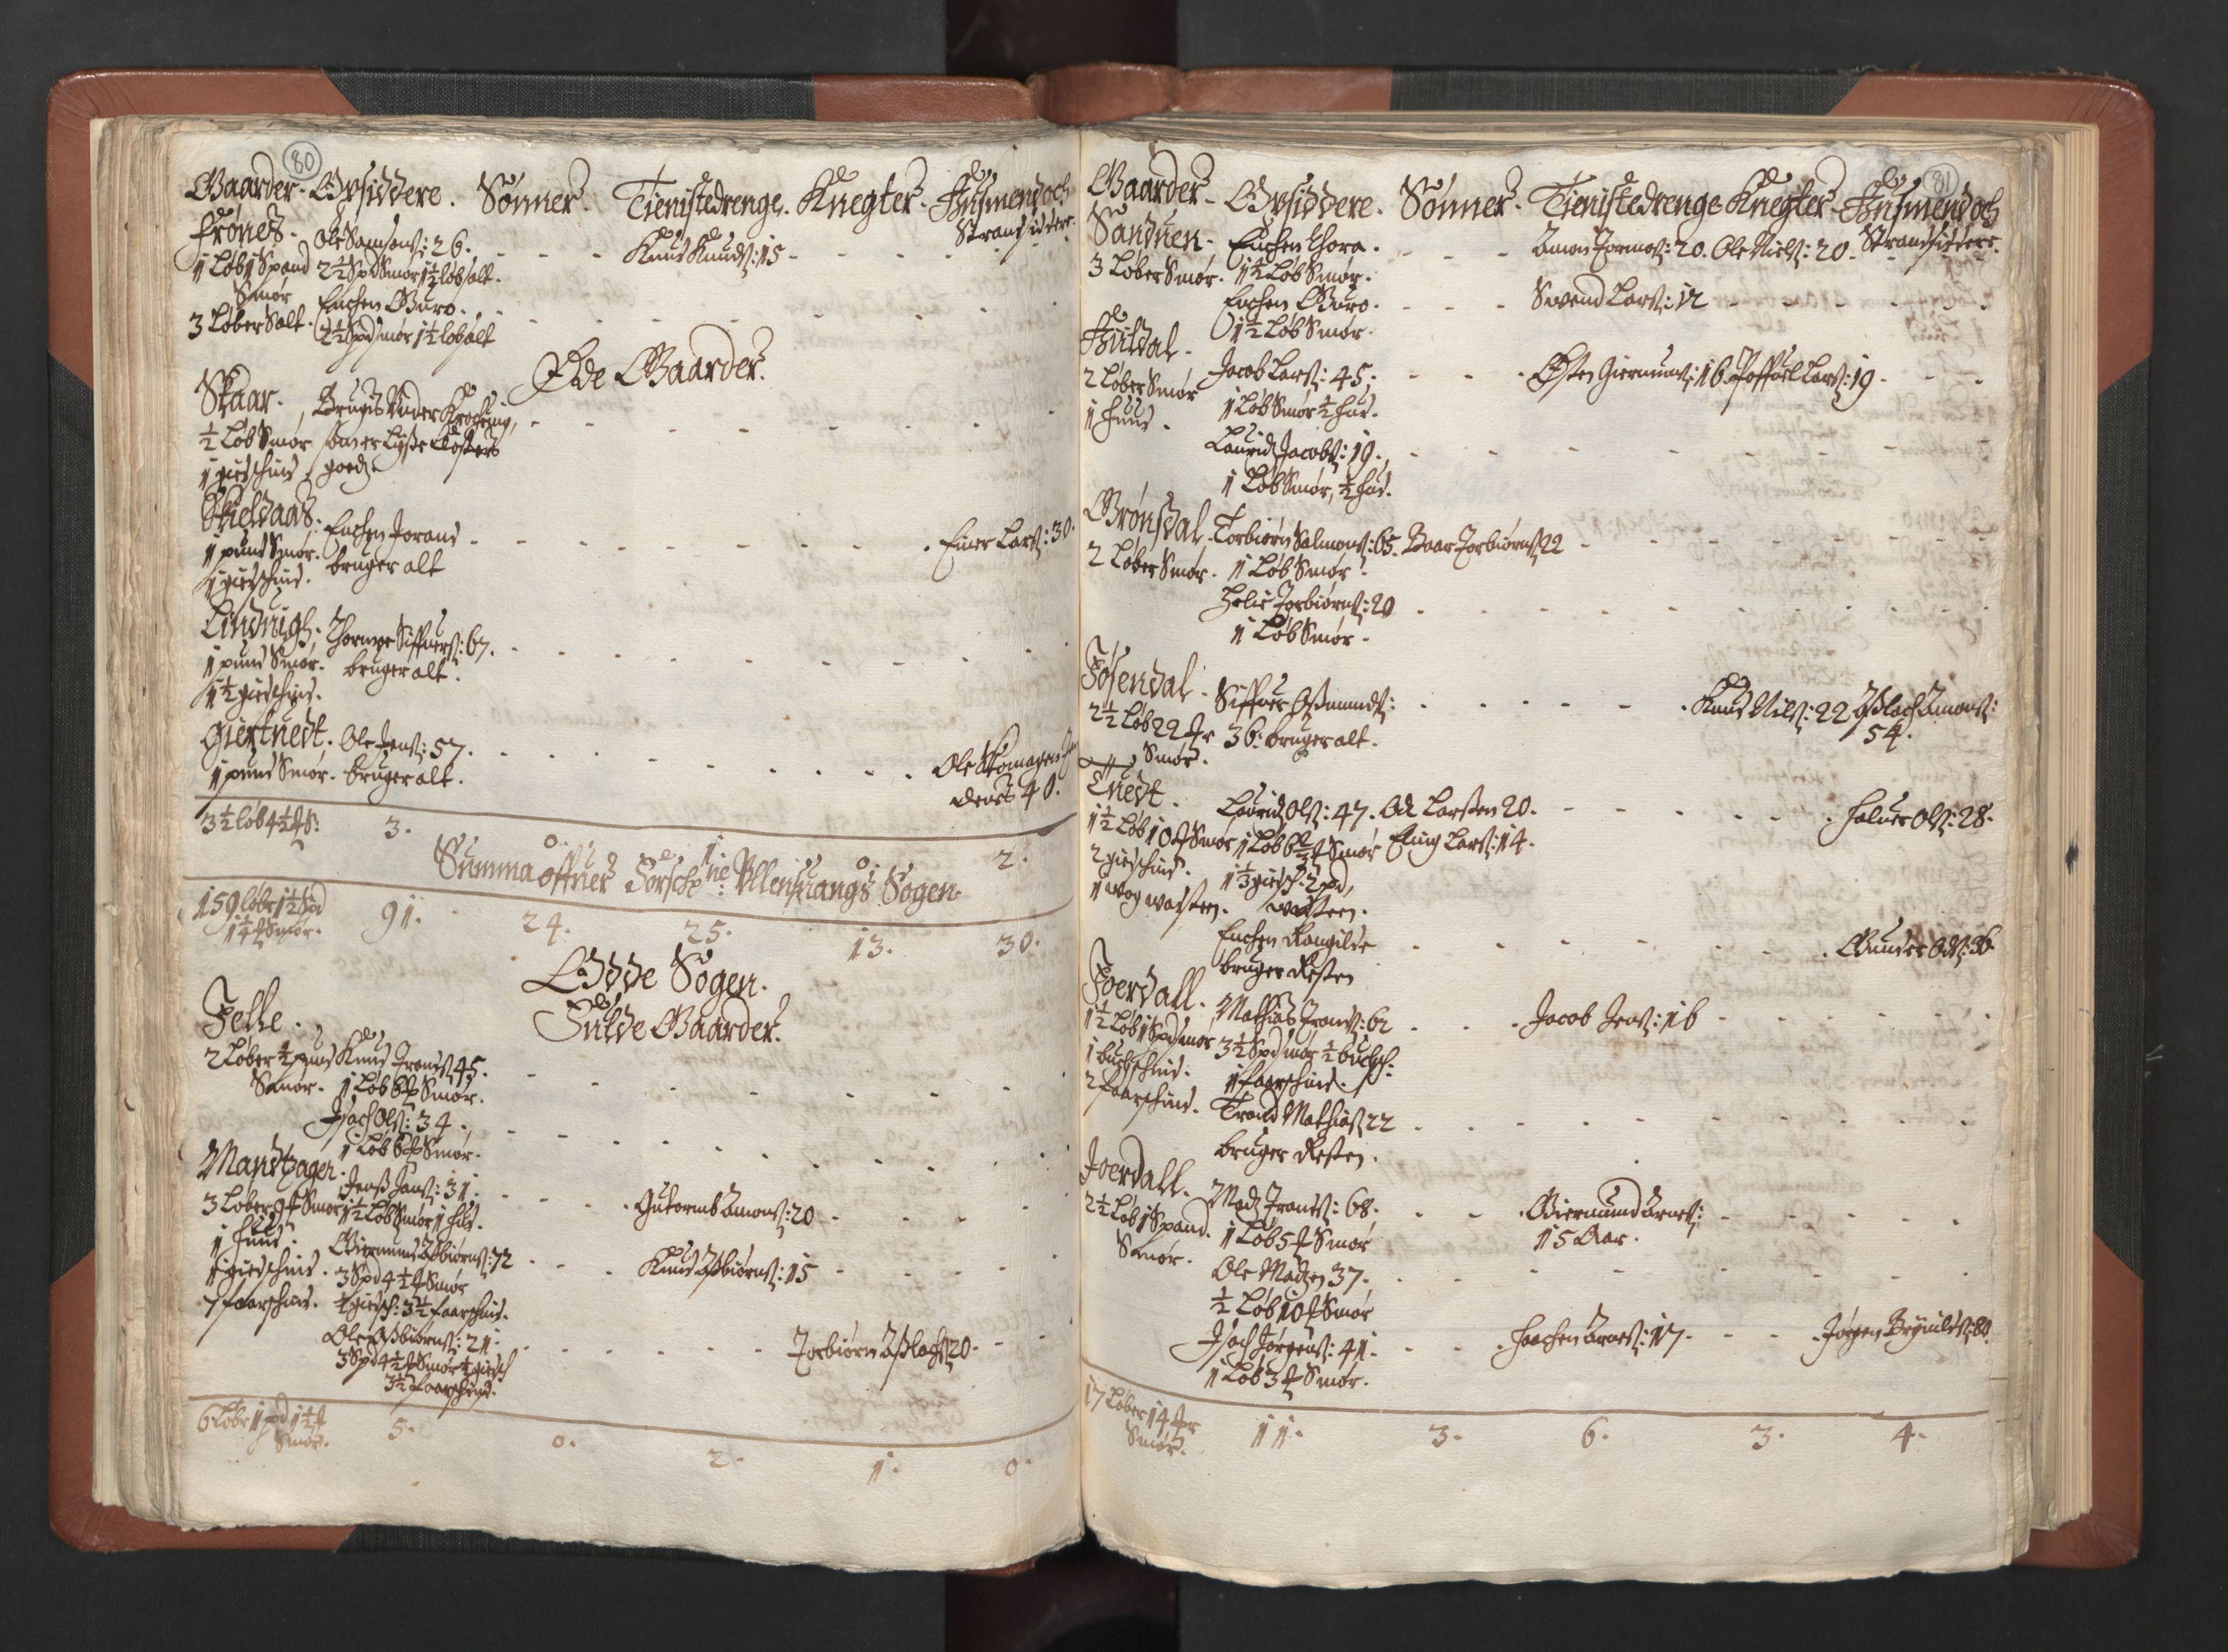 RA, Fogdenes og sorenskrivernes manntall 1664-1666, nr. 14: Hardanger len, Ytre Sogn fogderi og Indre Sogn fogderi, 1664-1665, s. 80-81